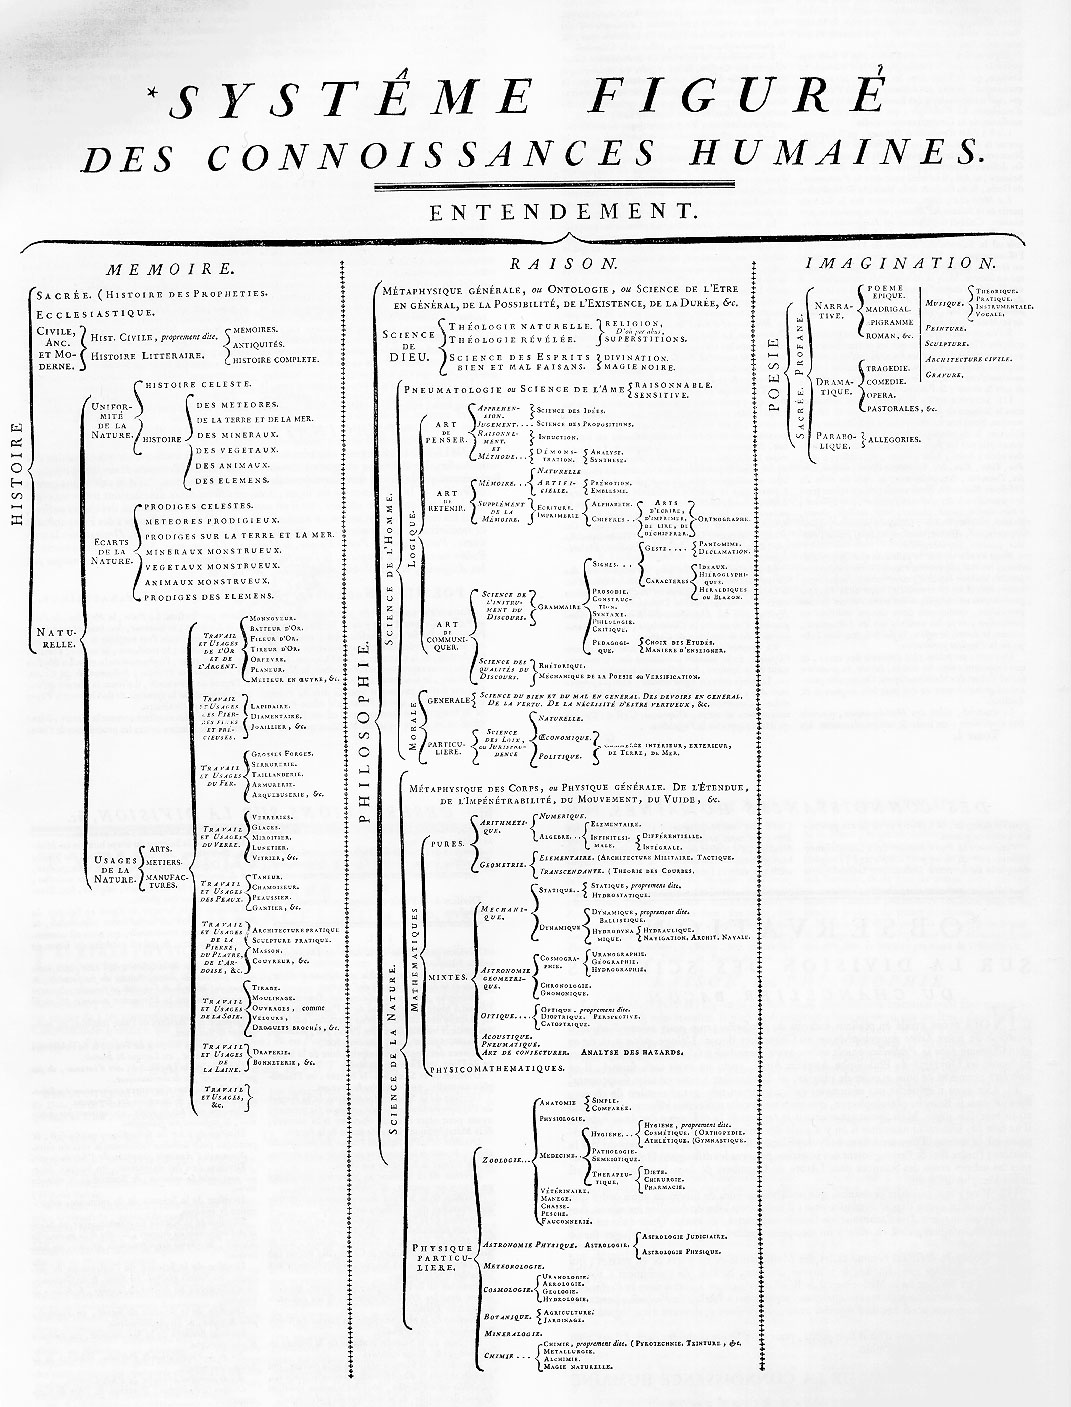 The encyclopedia of Diderot & D'alembert